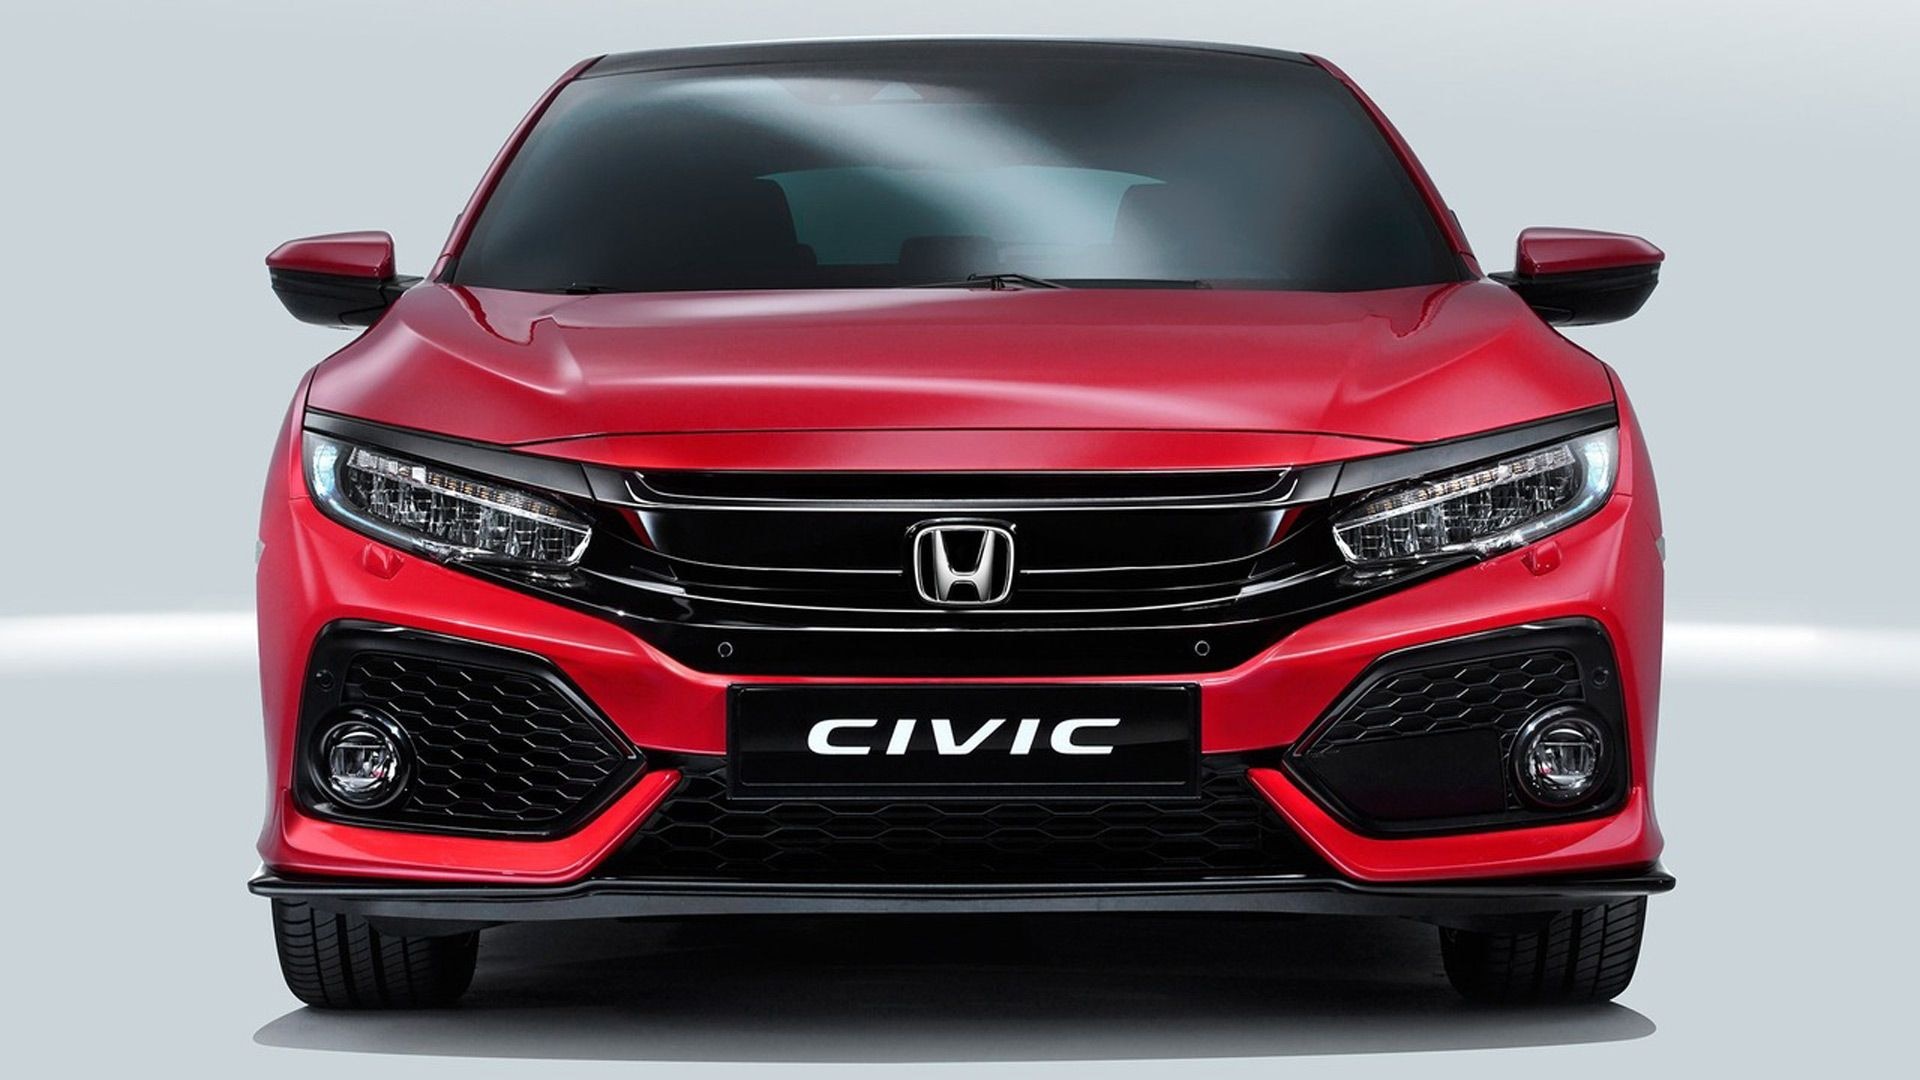 2017 Honda Civic Hatchback (European spec)